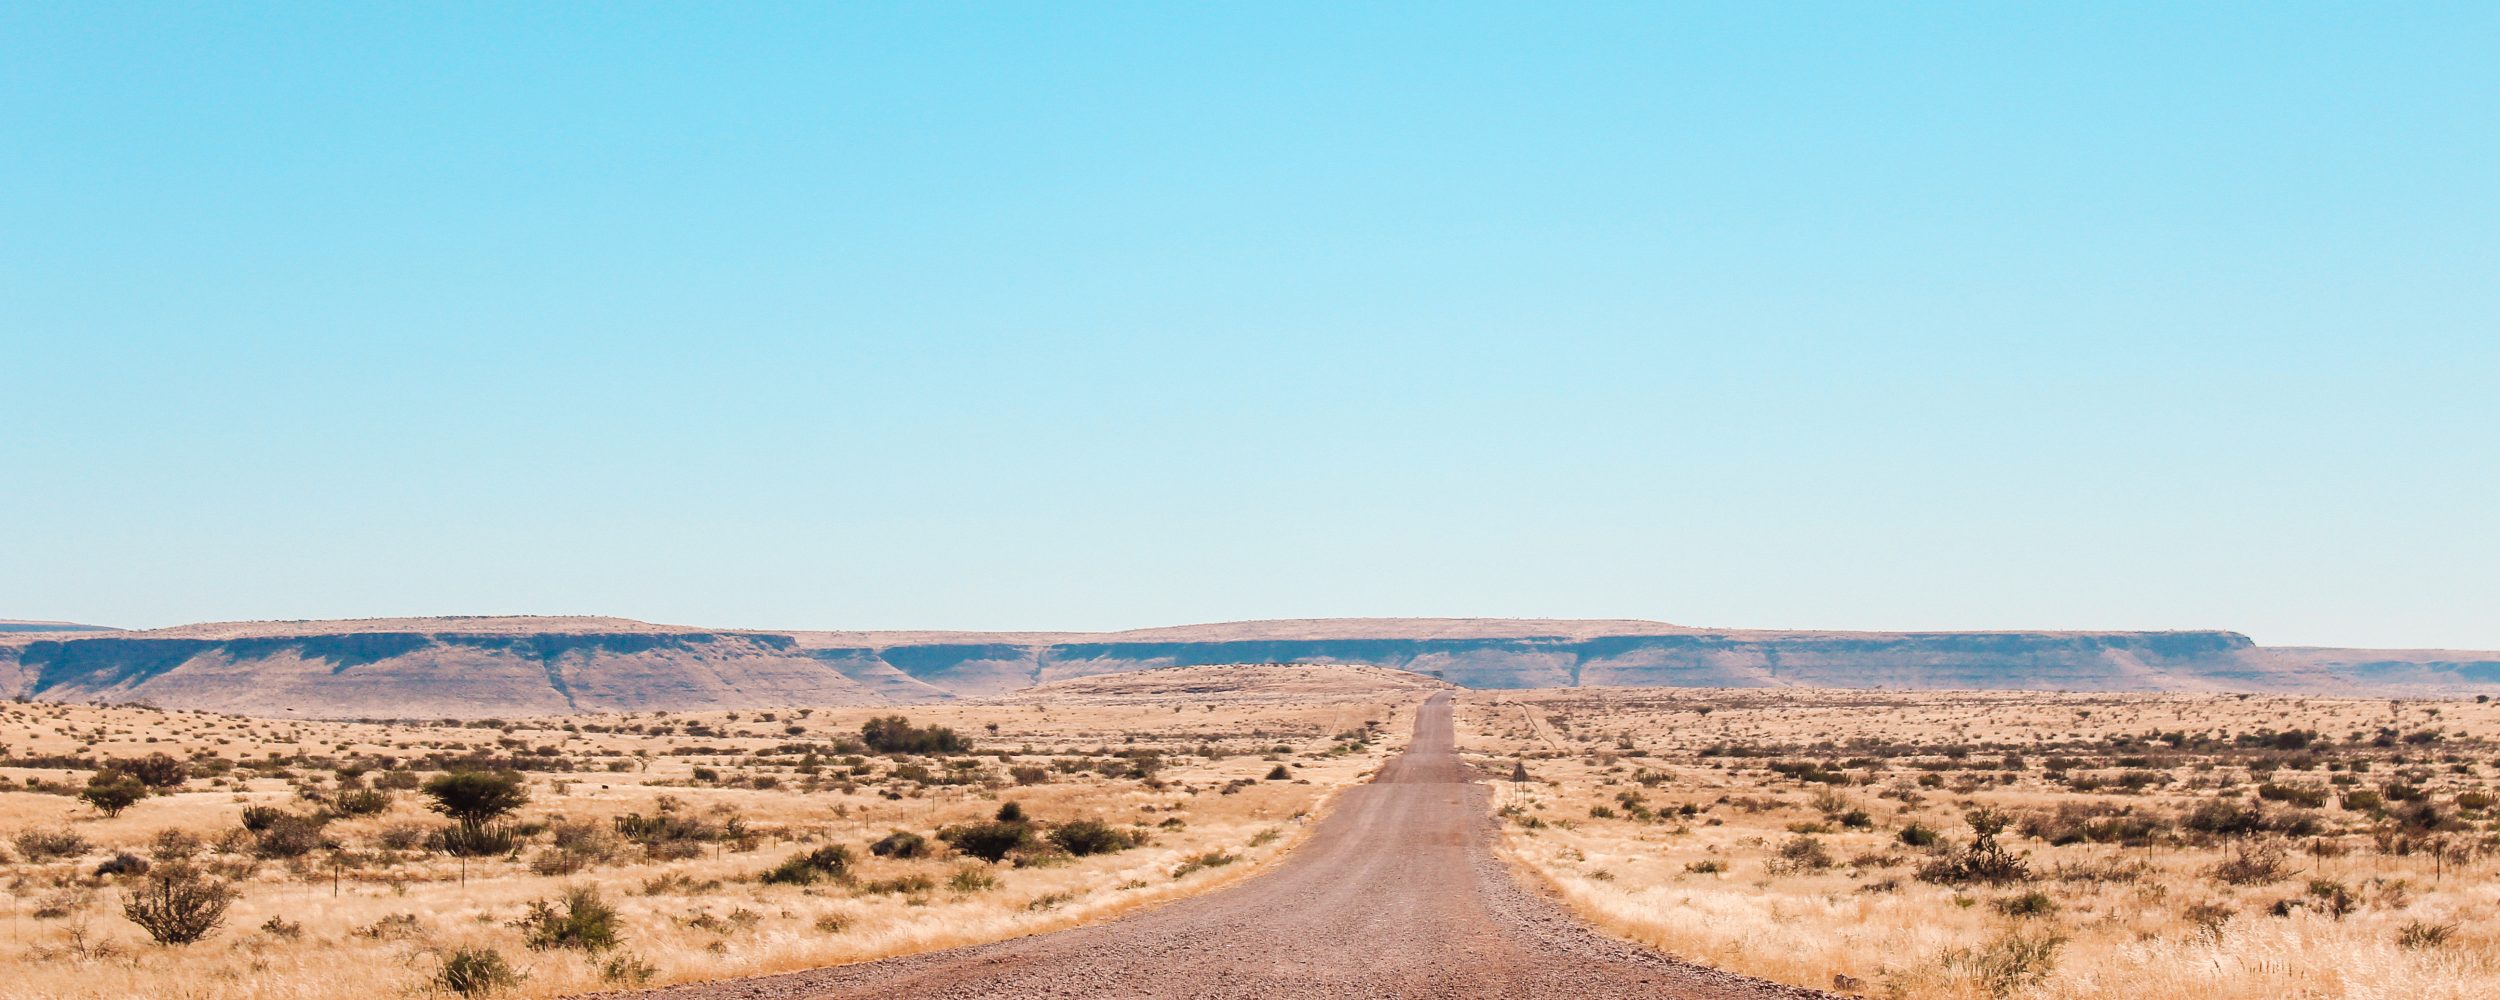 En grusväg i Namibia